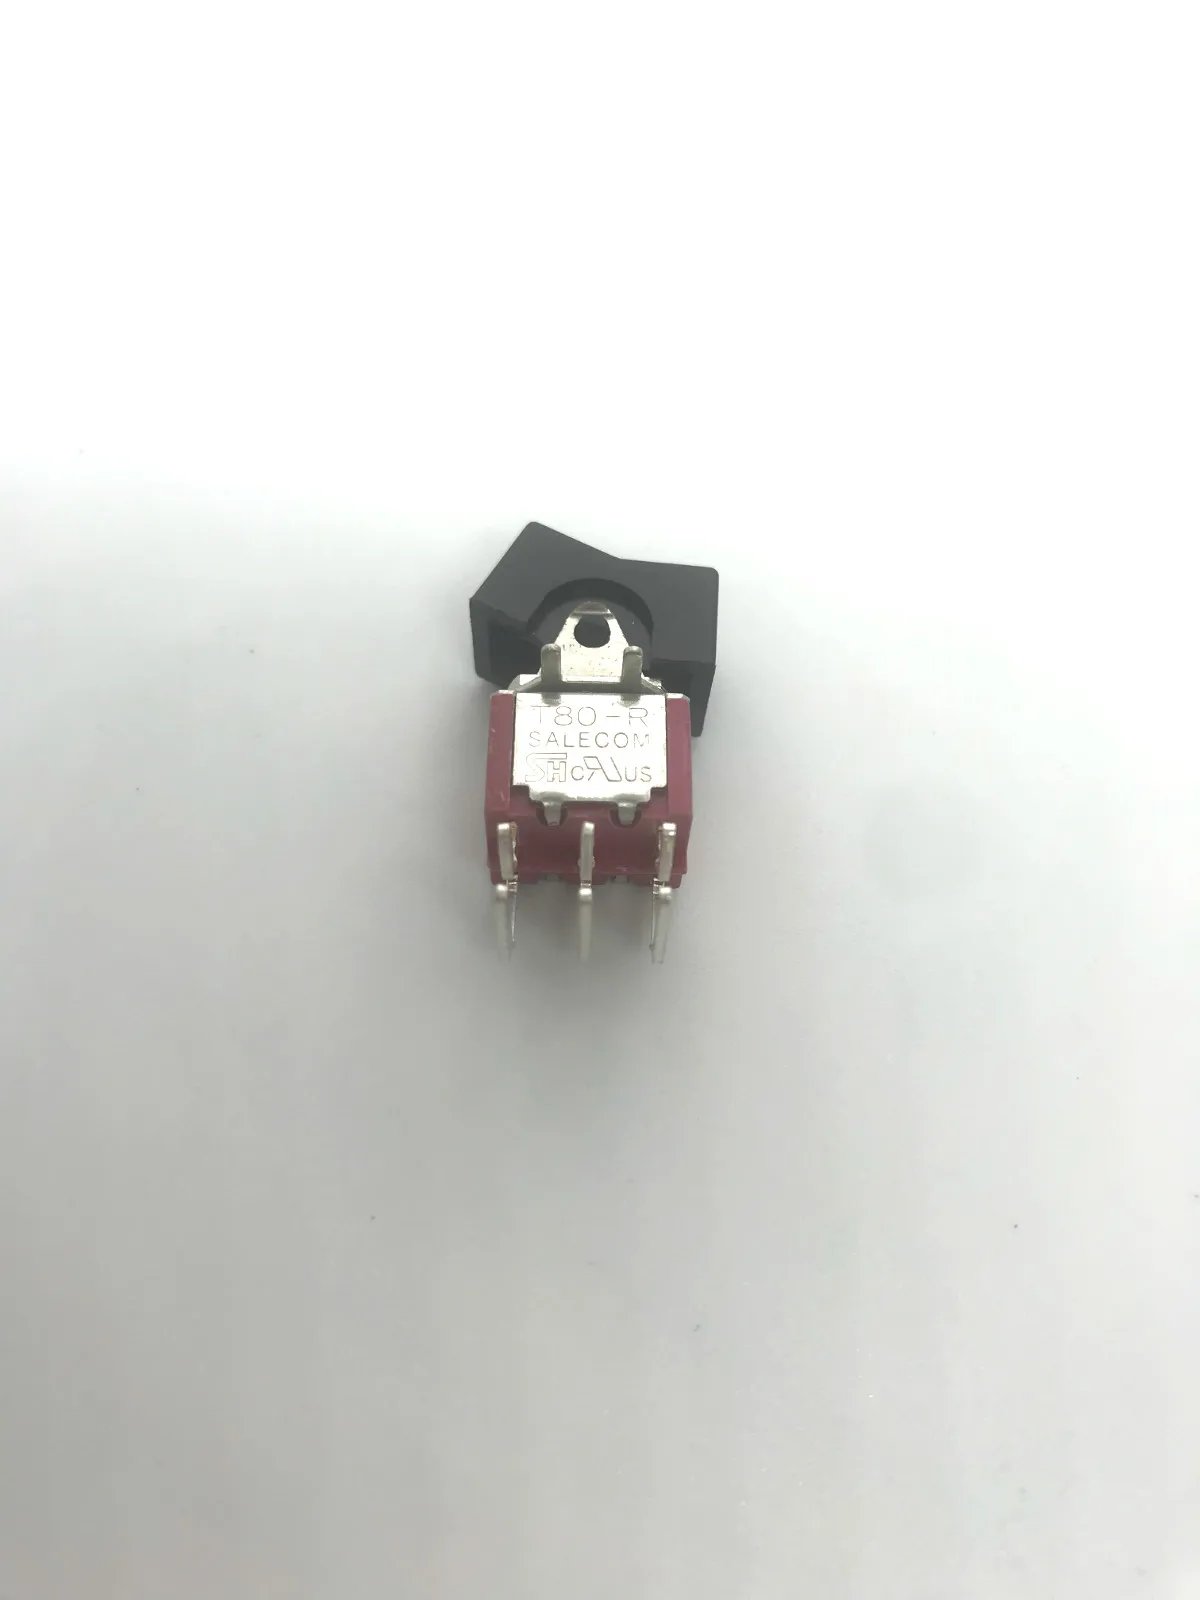 Interruptor de palanca basculante, T80-R, Xinghan, Taiwán, R8017-R11, DIP-3 o DIP-6, 2 bloques, Envío Gratis, 2 unids/lote